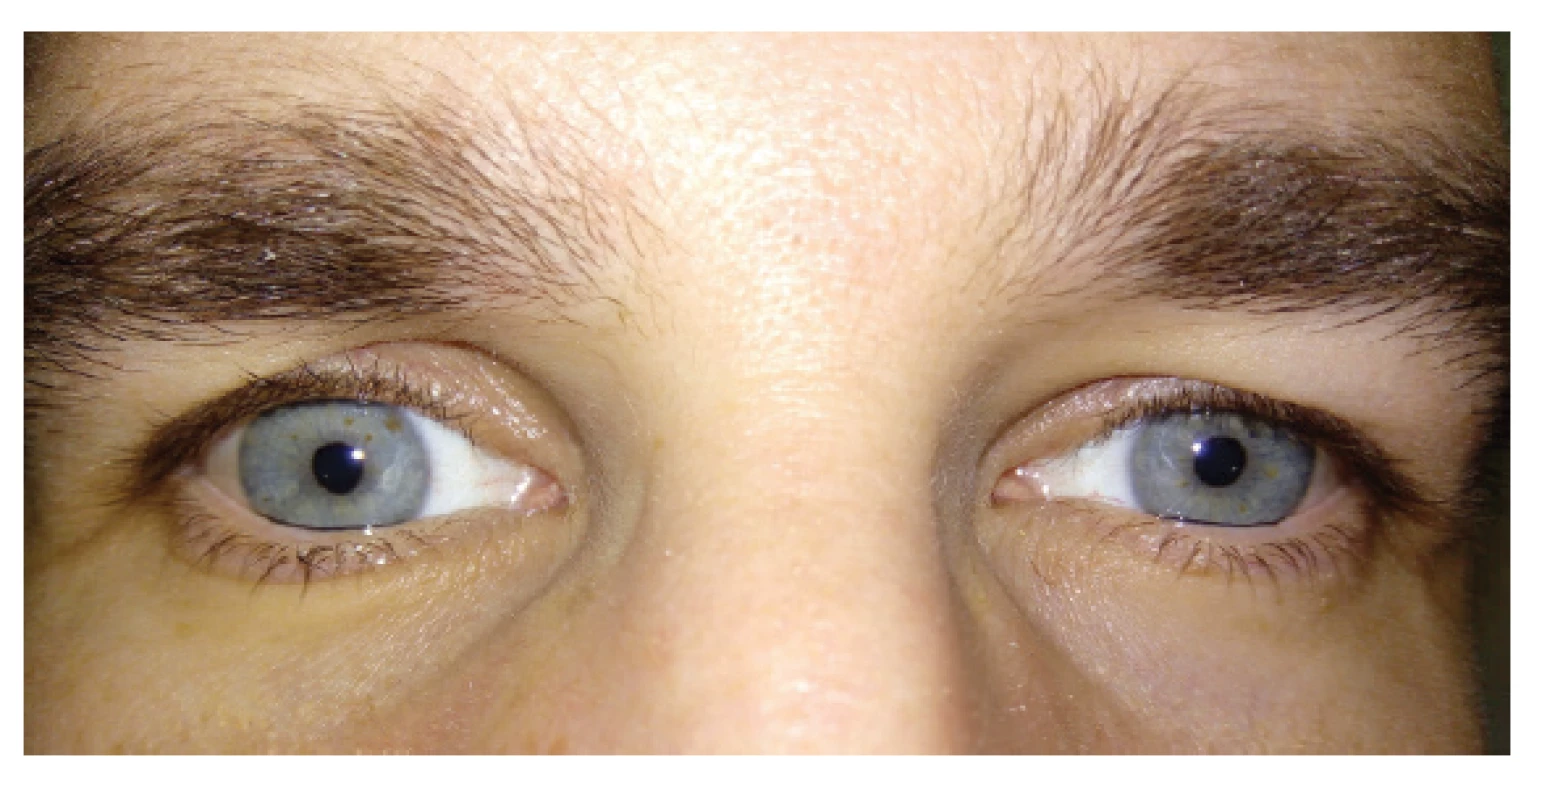 Symmetry of the upper eyelids of both eyes 1 year after
antrostomy